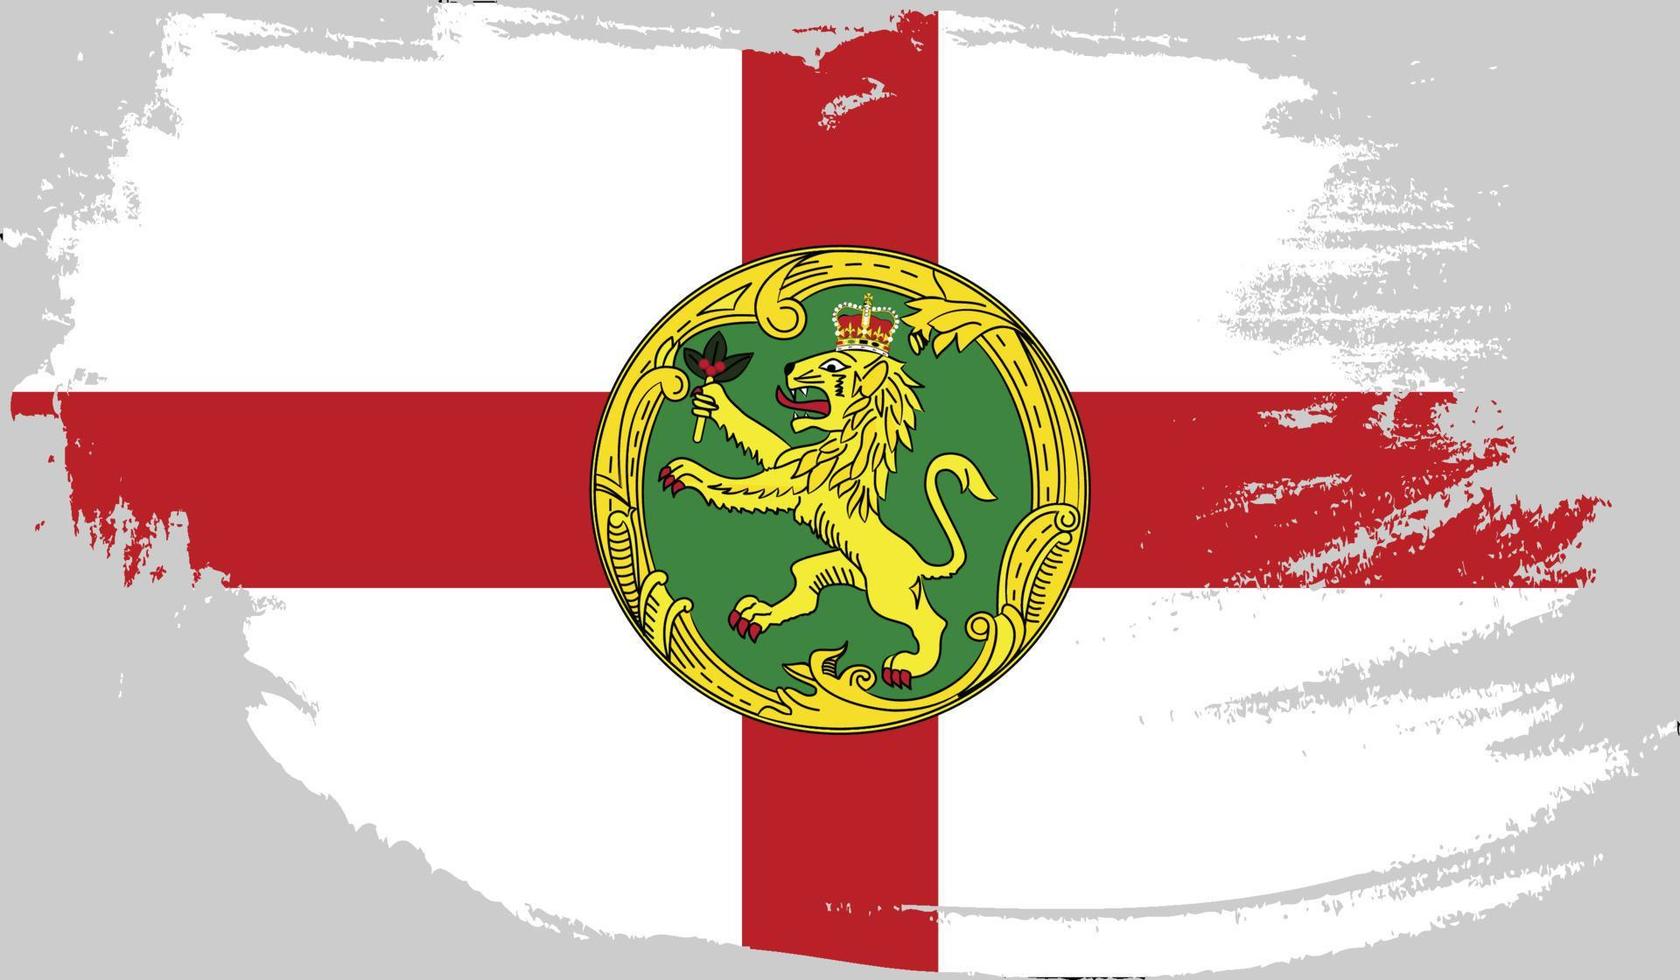 Alderney flag with grunge texture vector